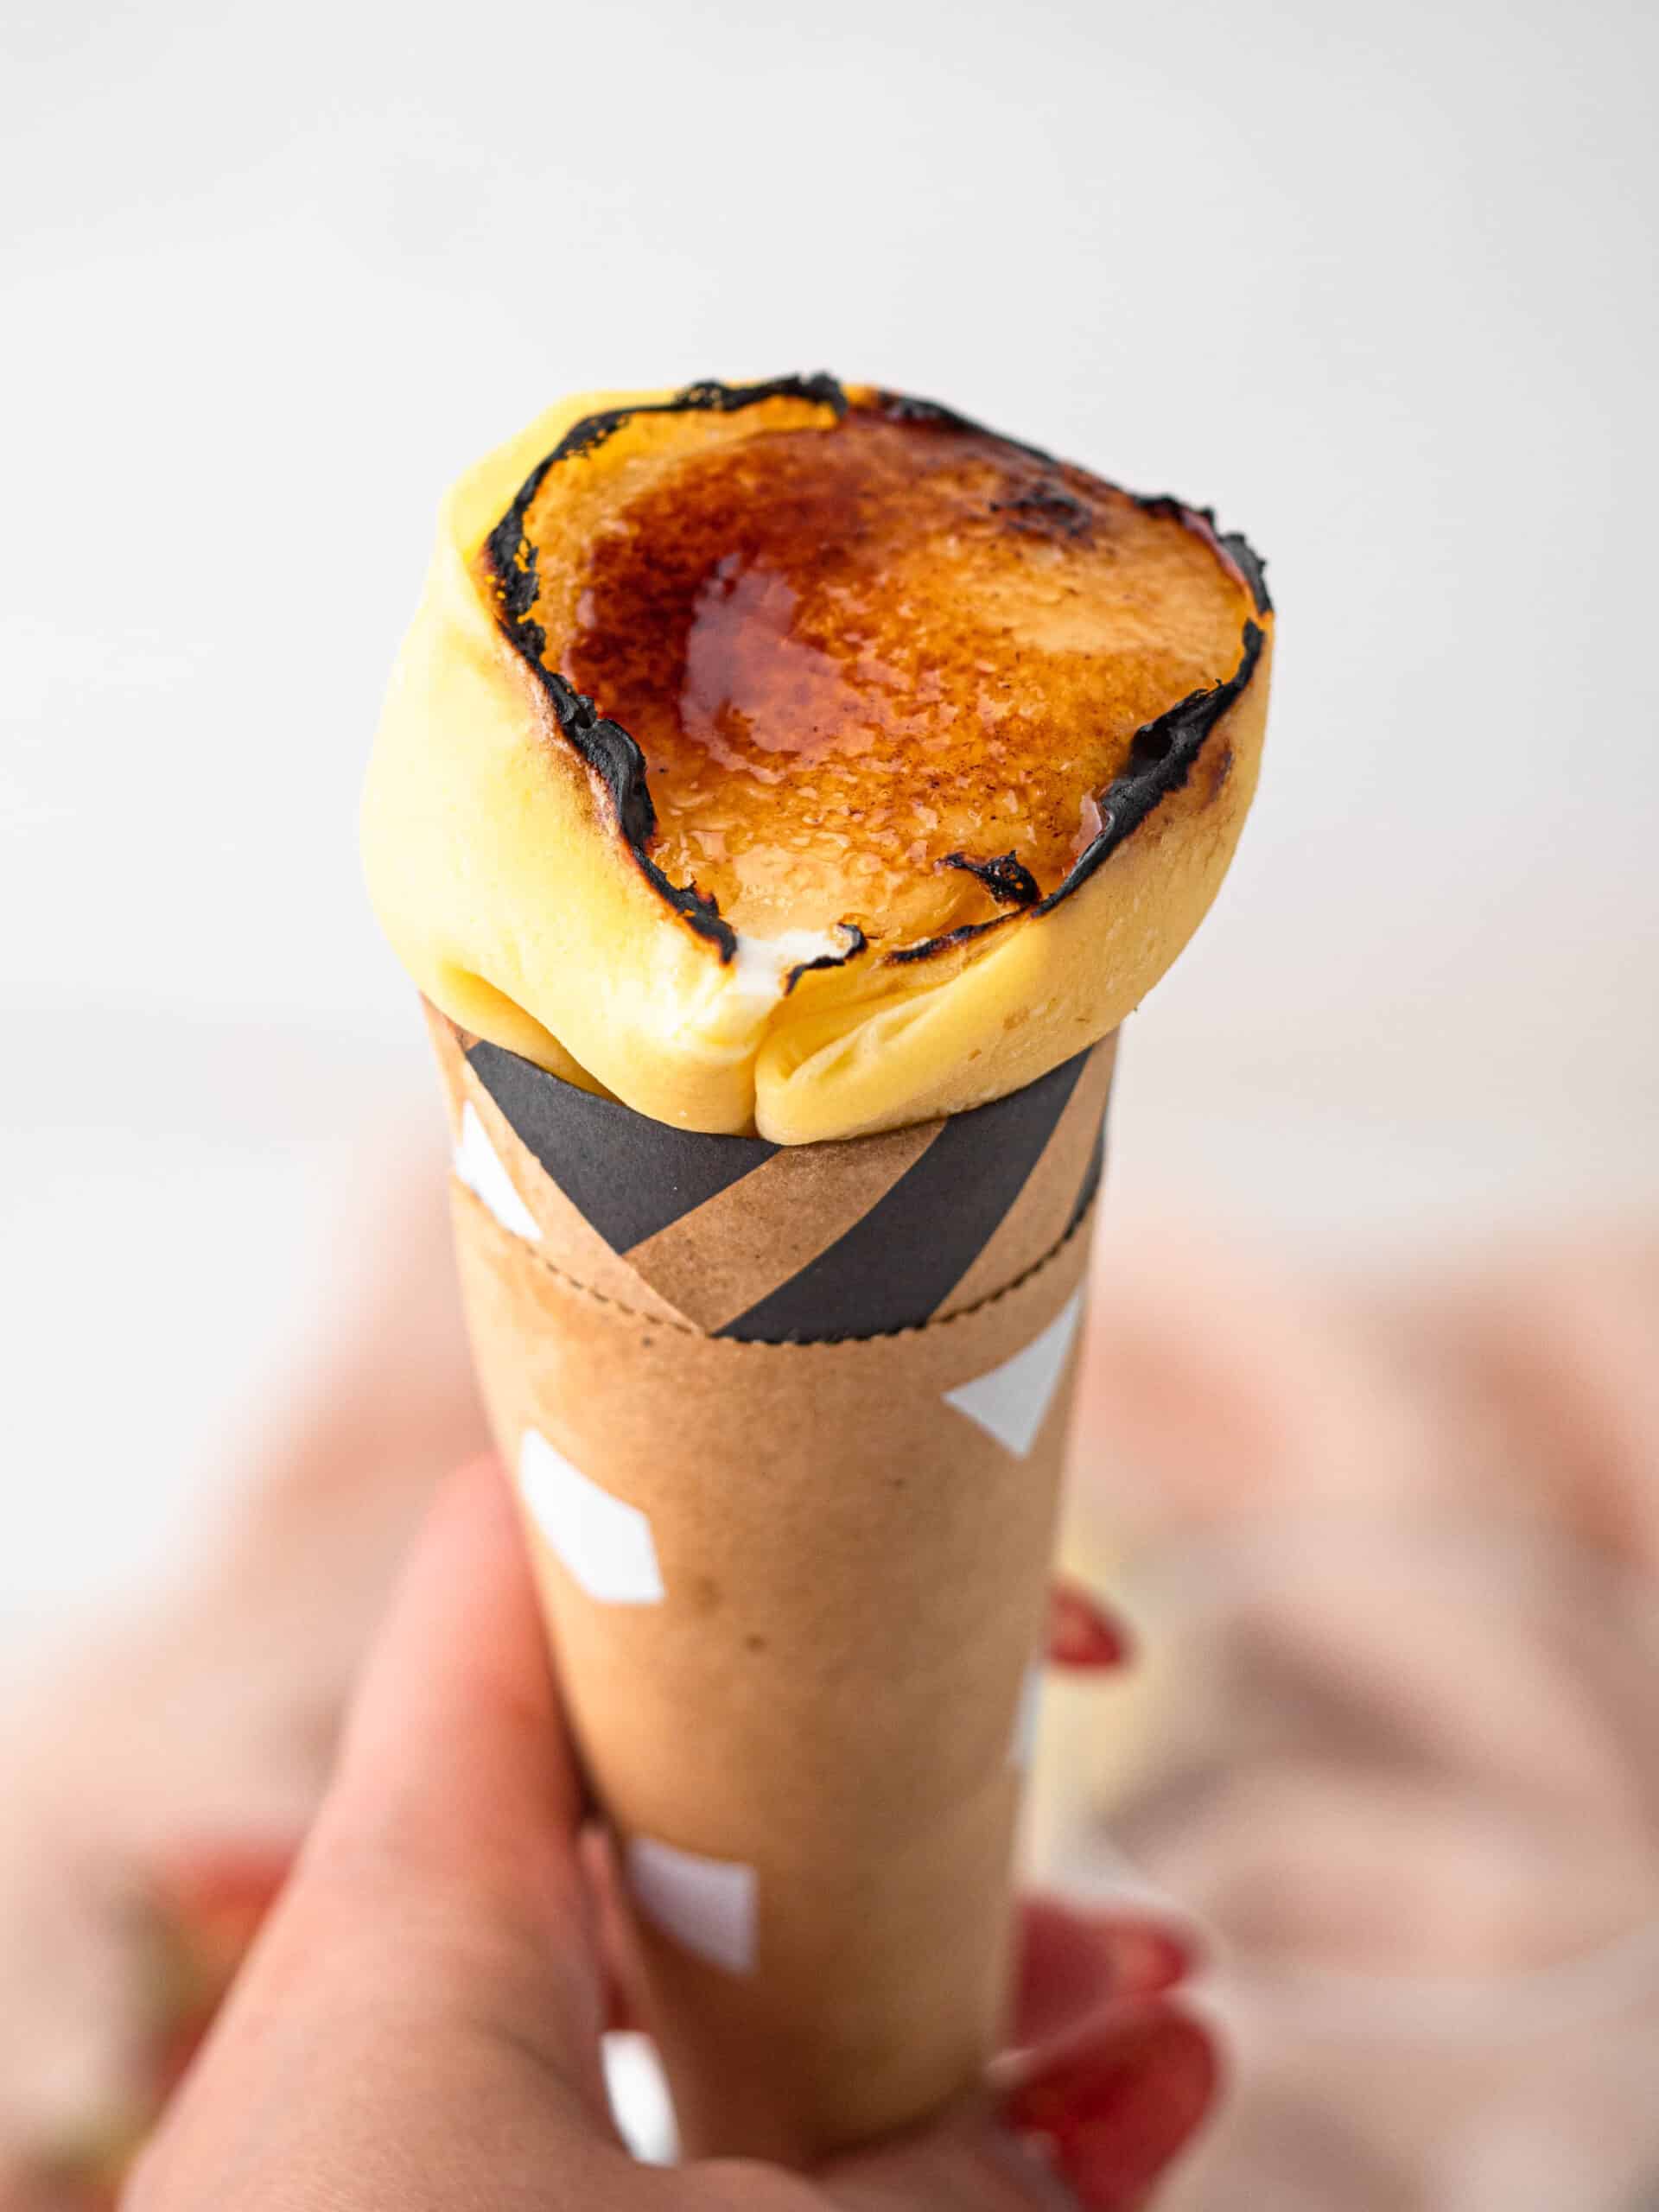 Japanese creme brulee crepe cone